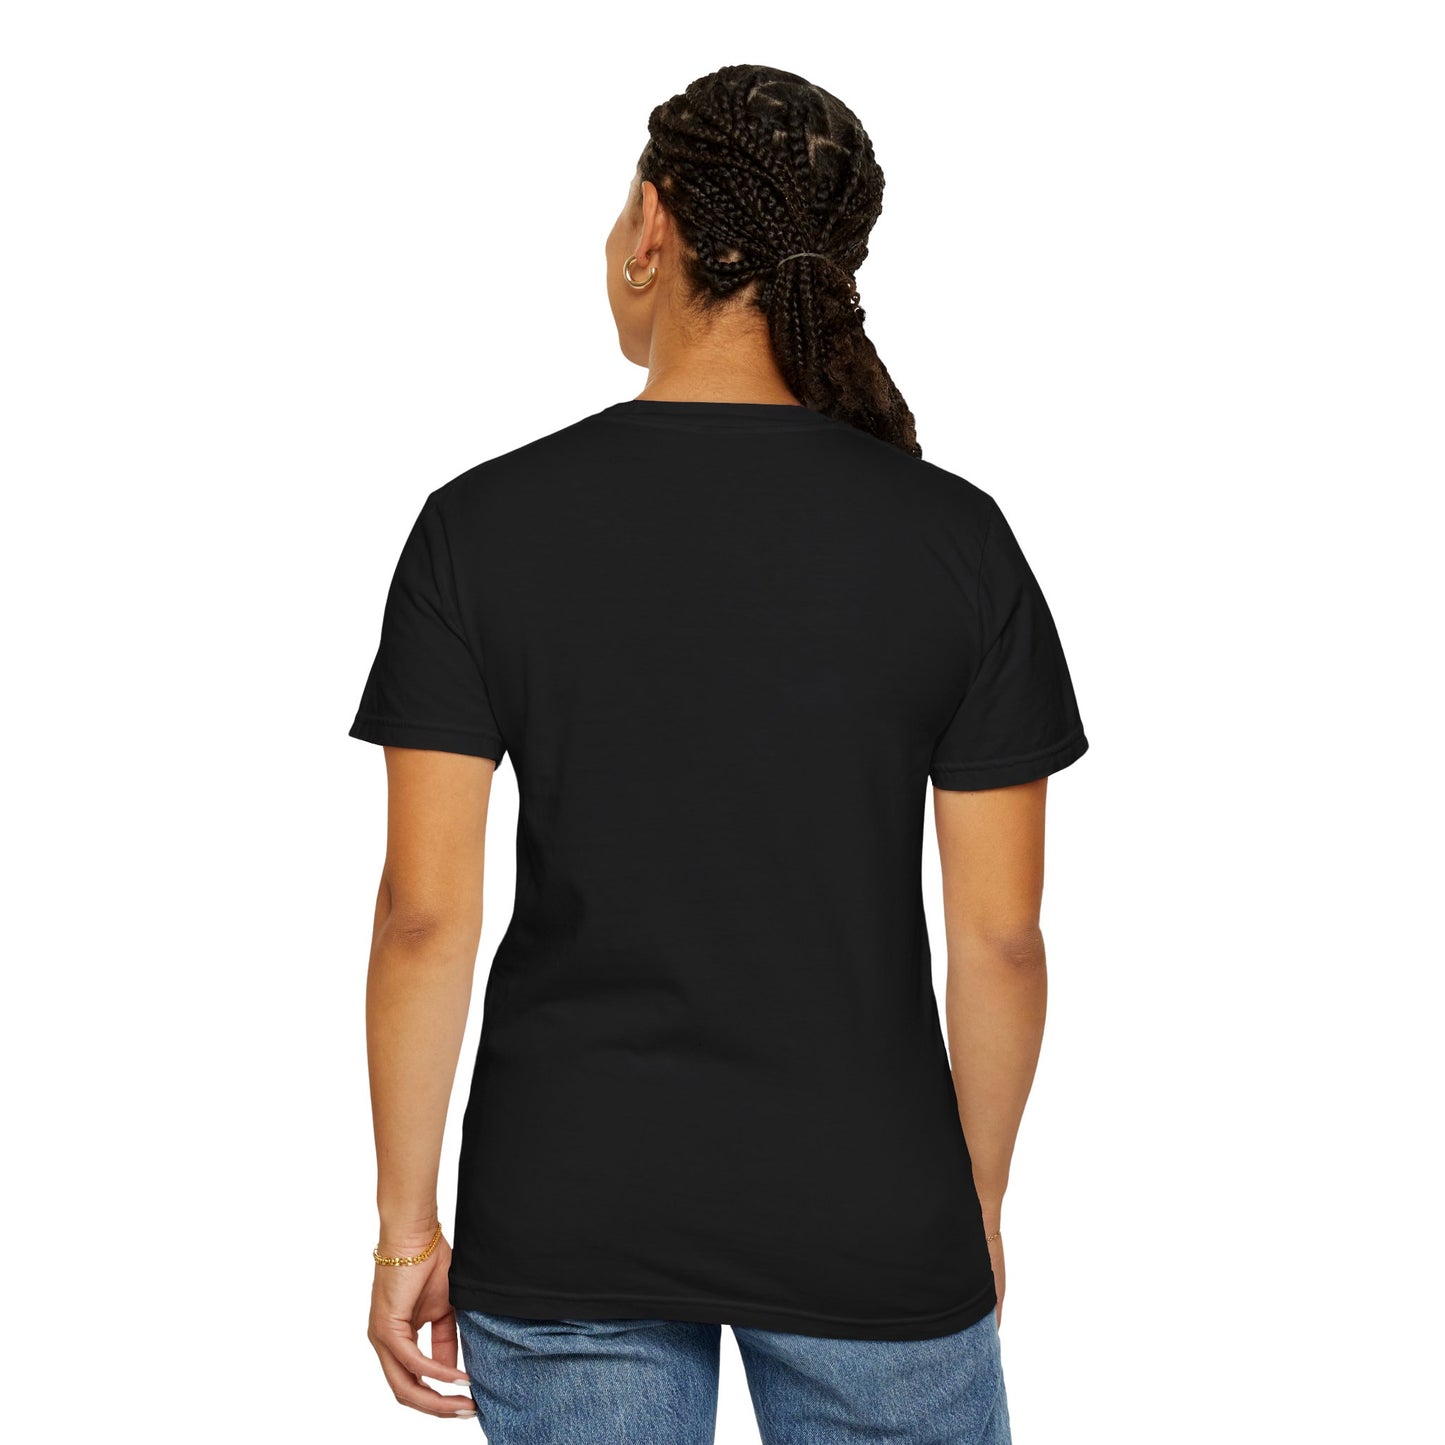 Unisex Comfort Colors T-shirt | Sea of Treachery Sigil